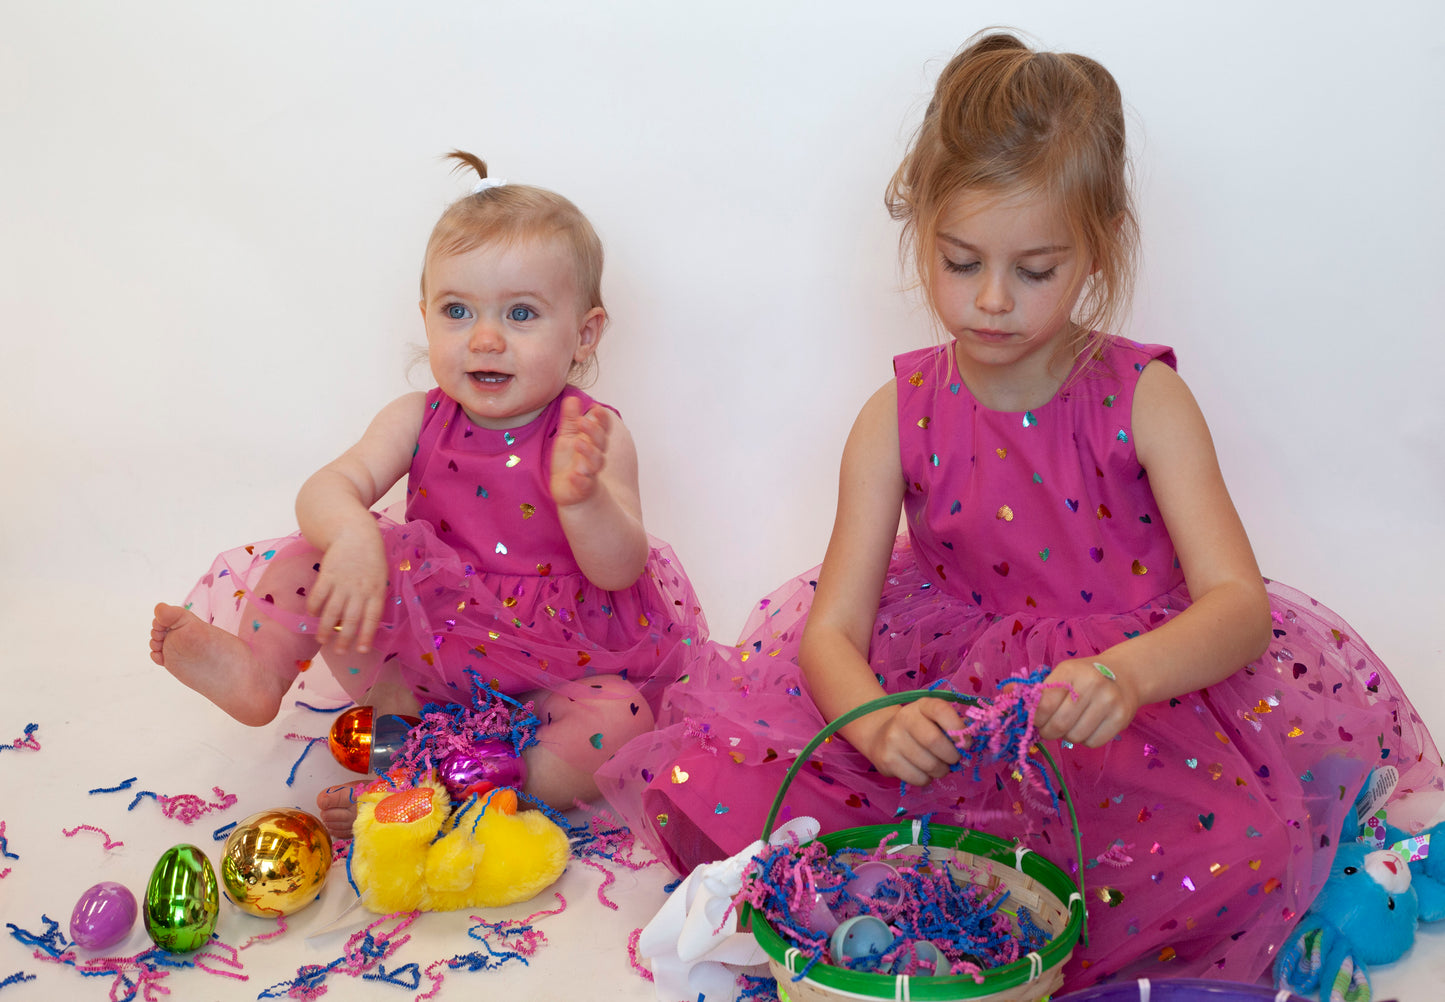 Pink Rainbow Hearts Confetti Dress